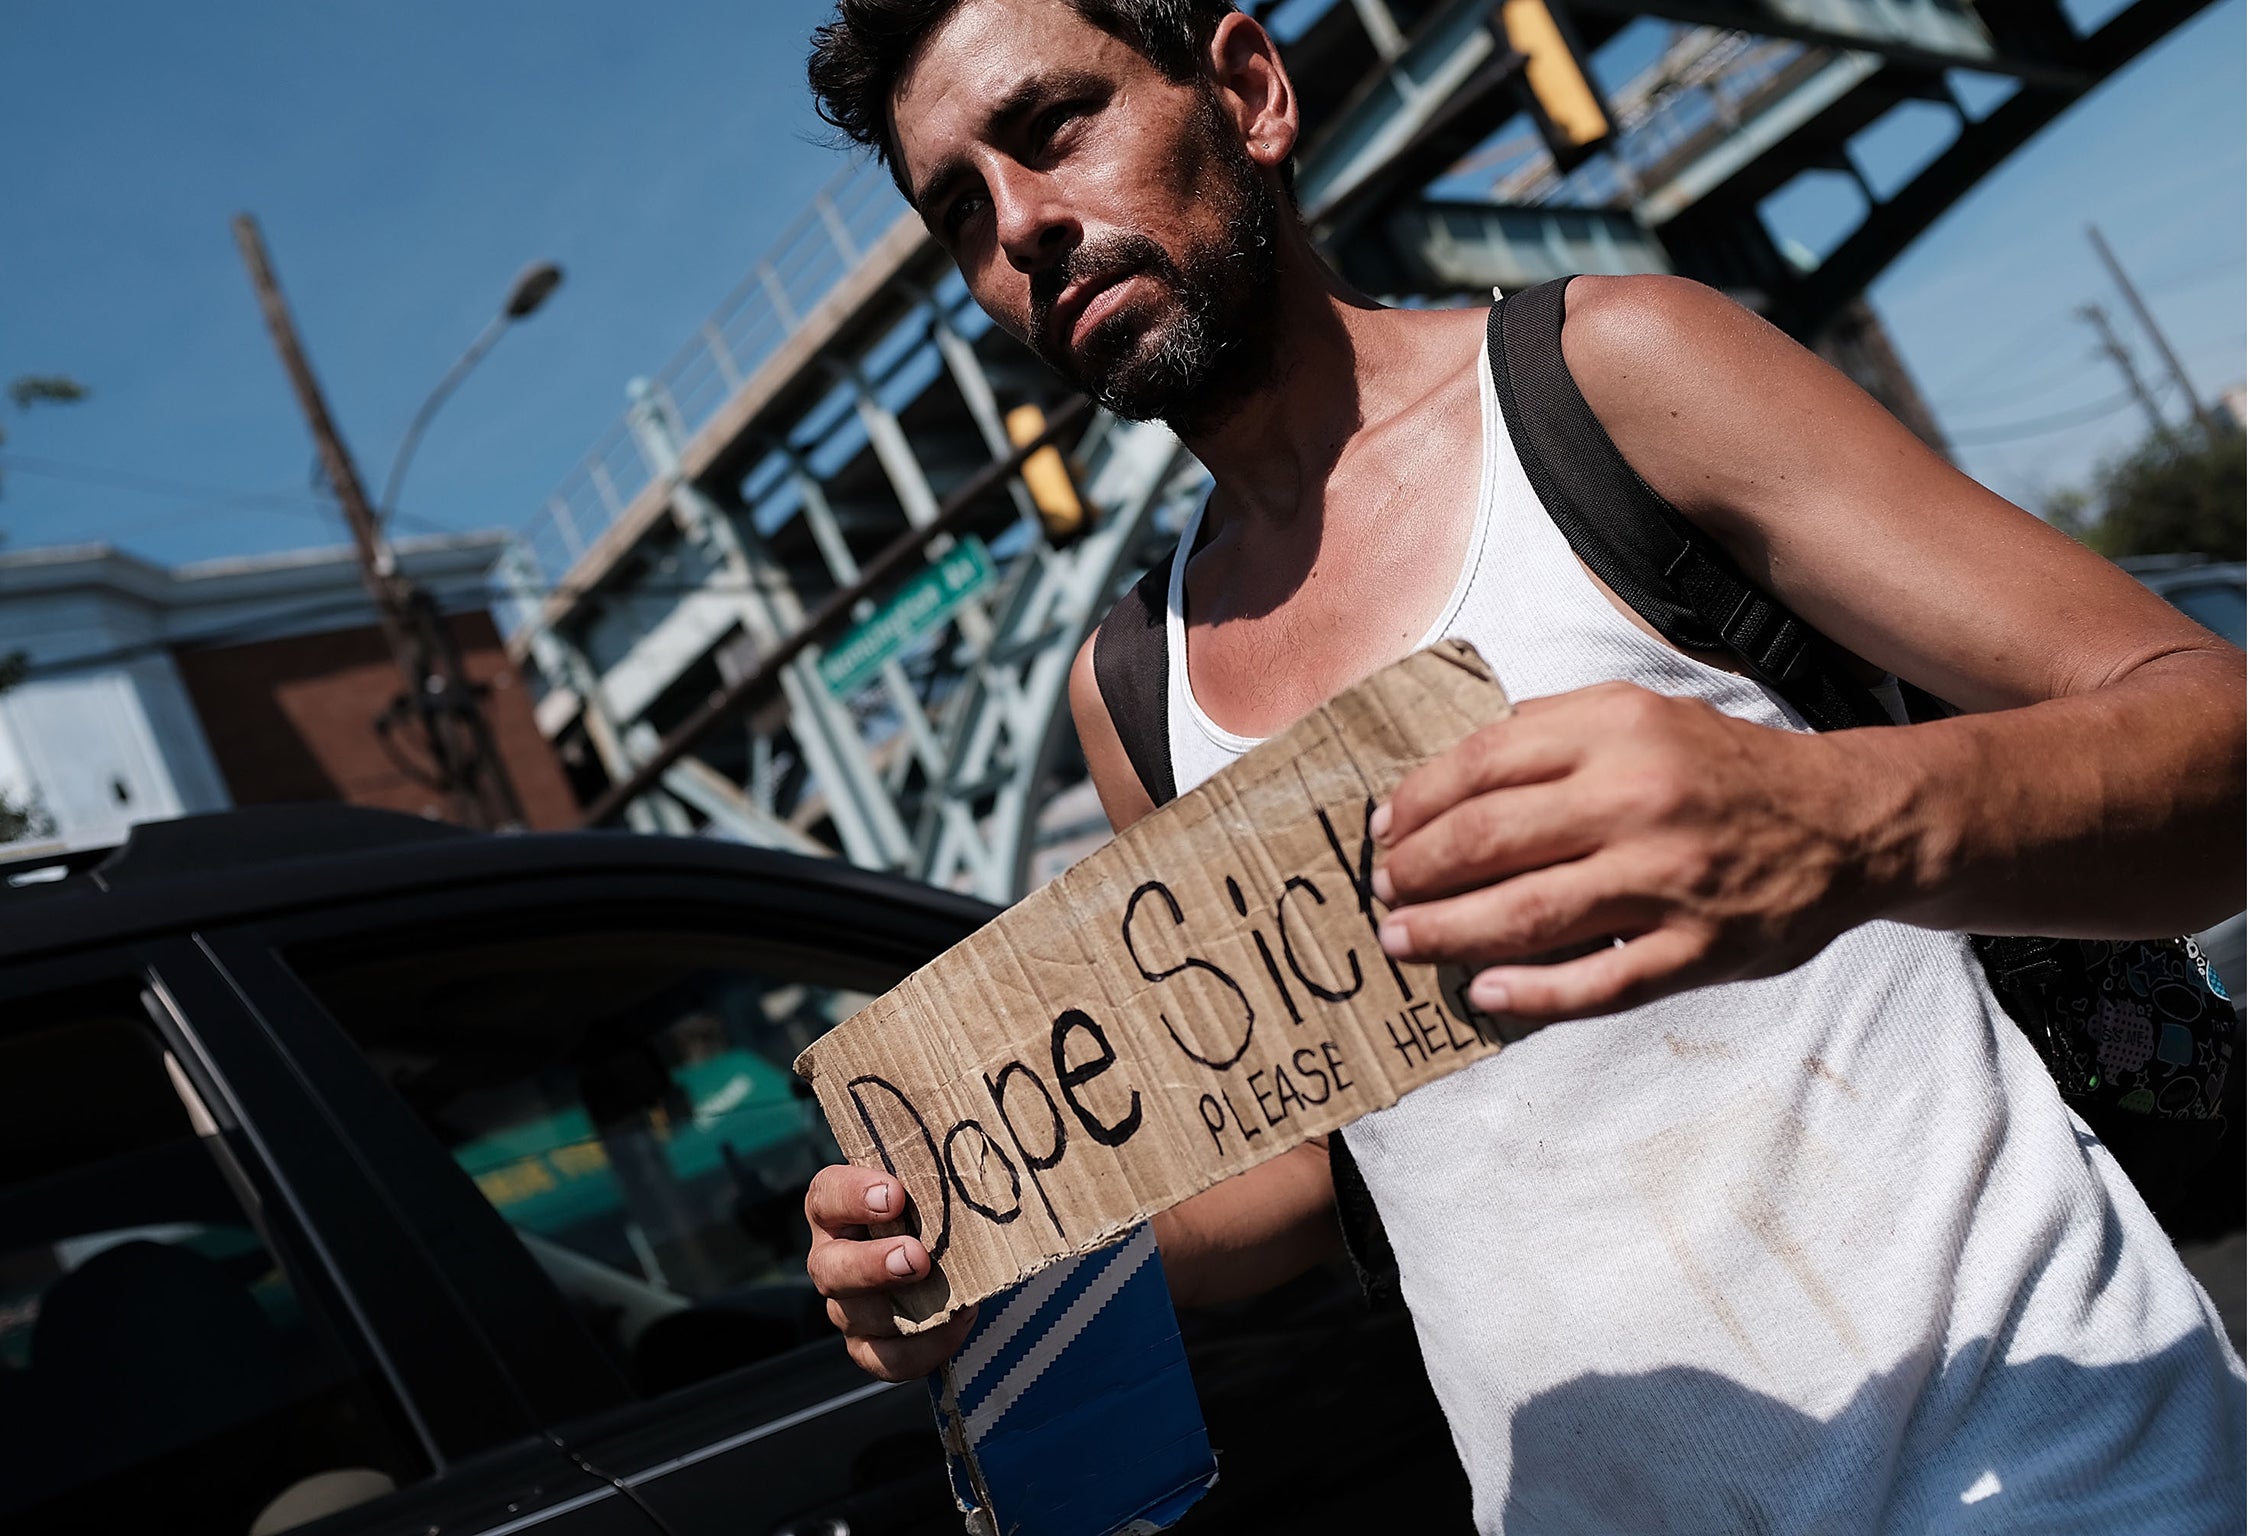 A heroin addict seeks help in Kensington, Philadelphia